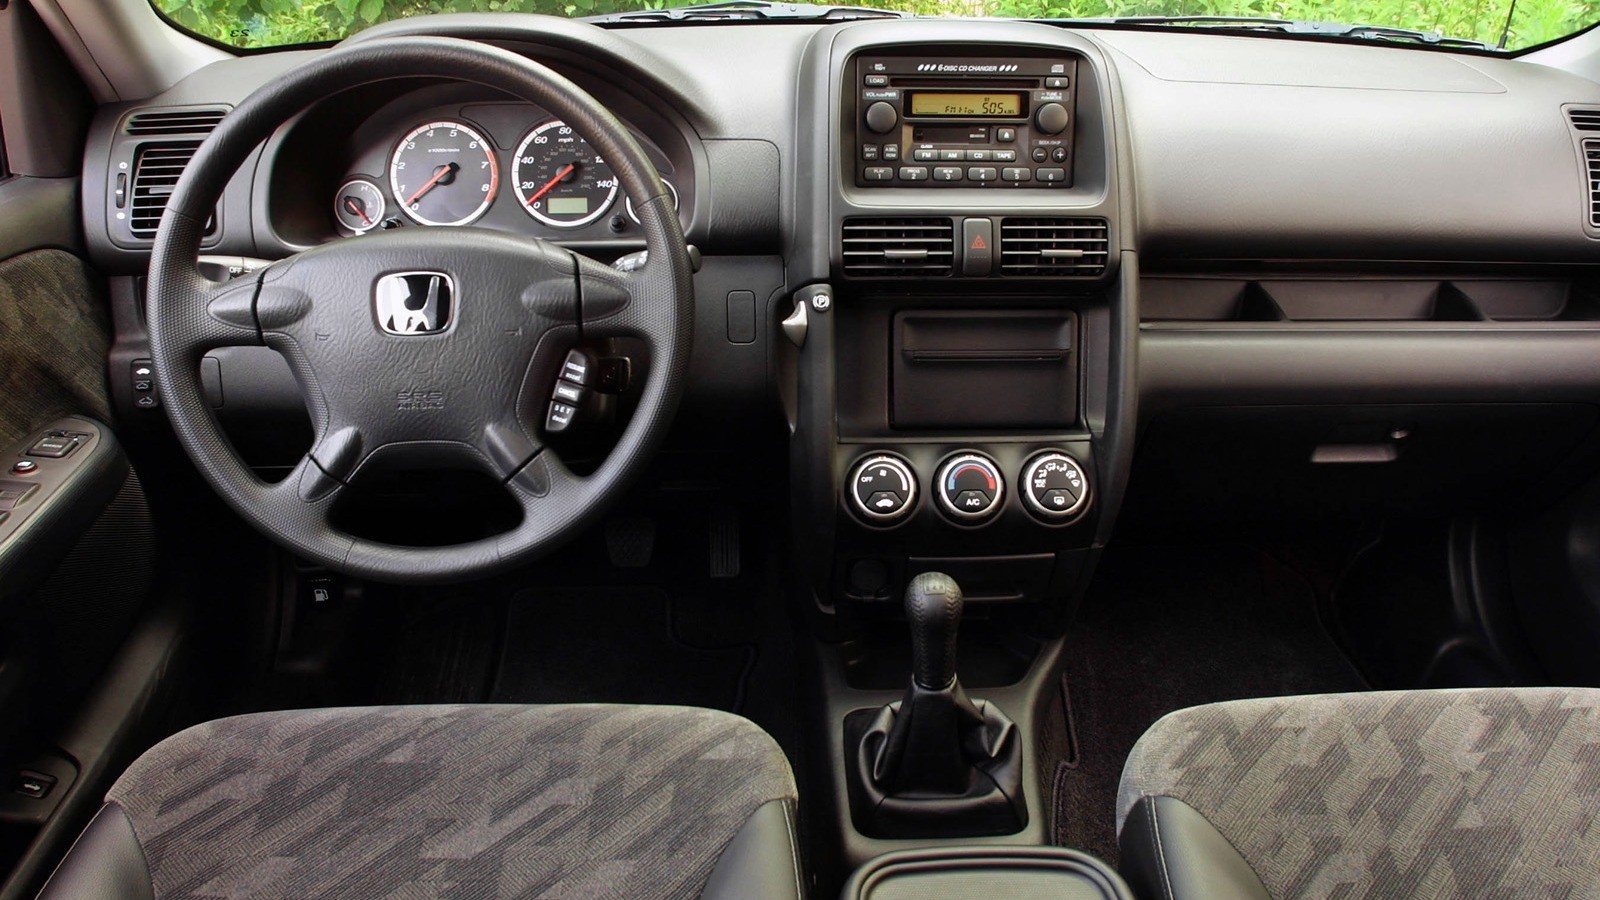 Т. О. подвески (часть 2). — Honda CR-V, 2.0 л, 2003 года на DRIVE2